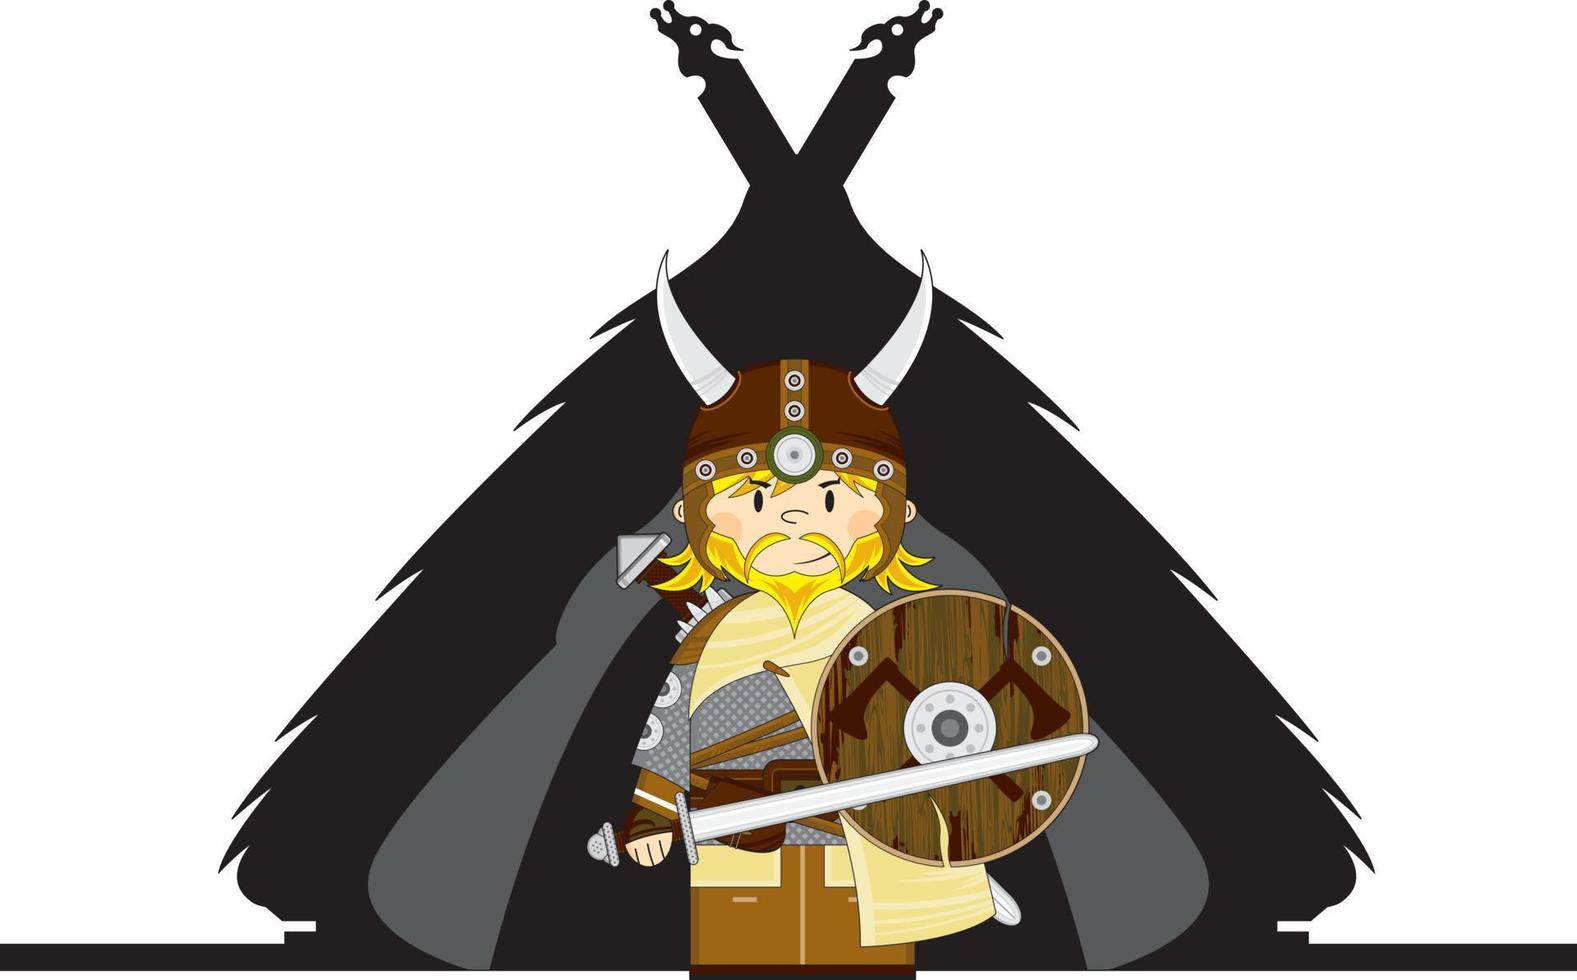 Cute Cartoon Viking Warrior and Homestead Norse History Illustration vector